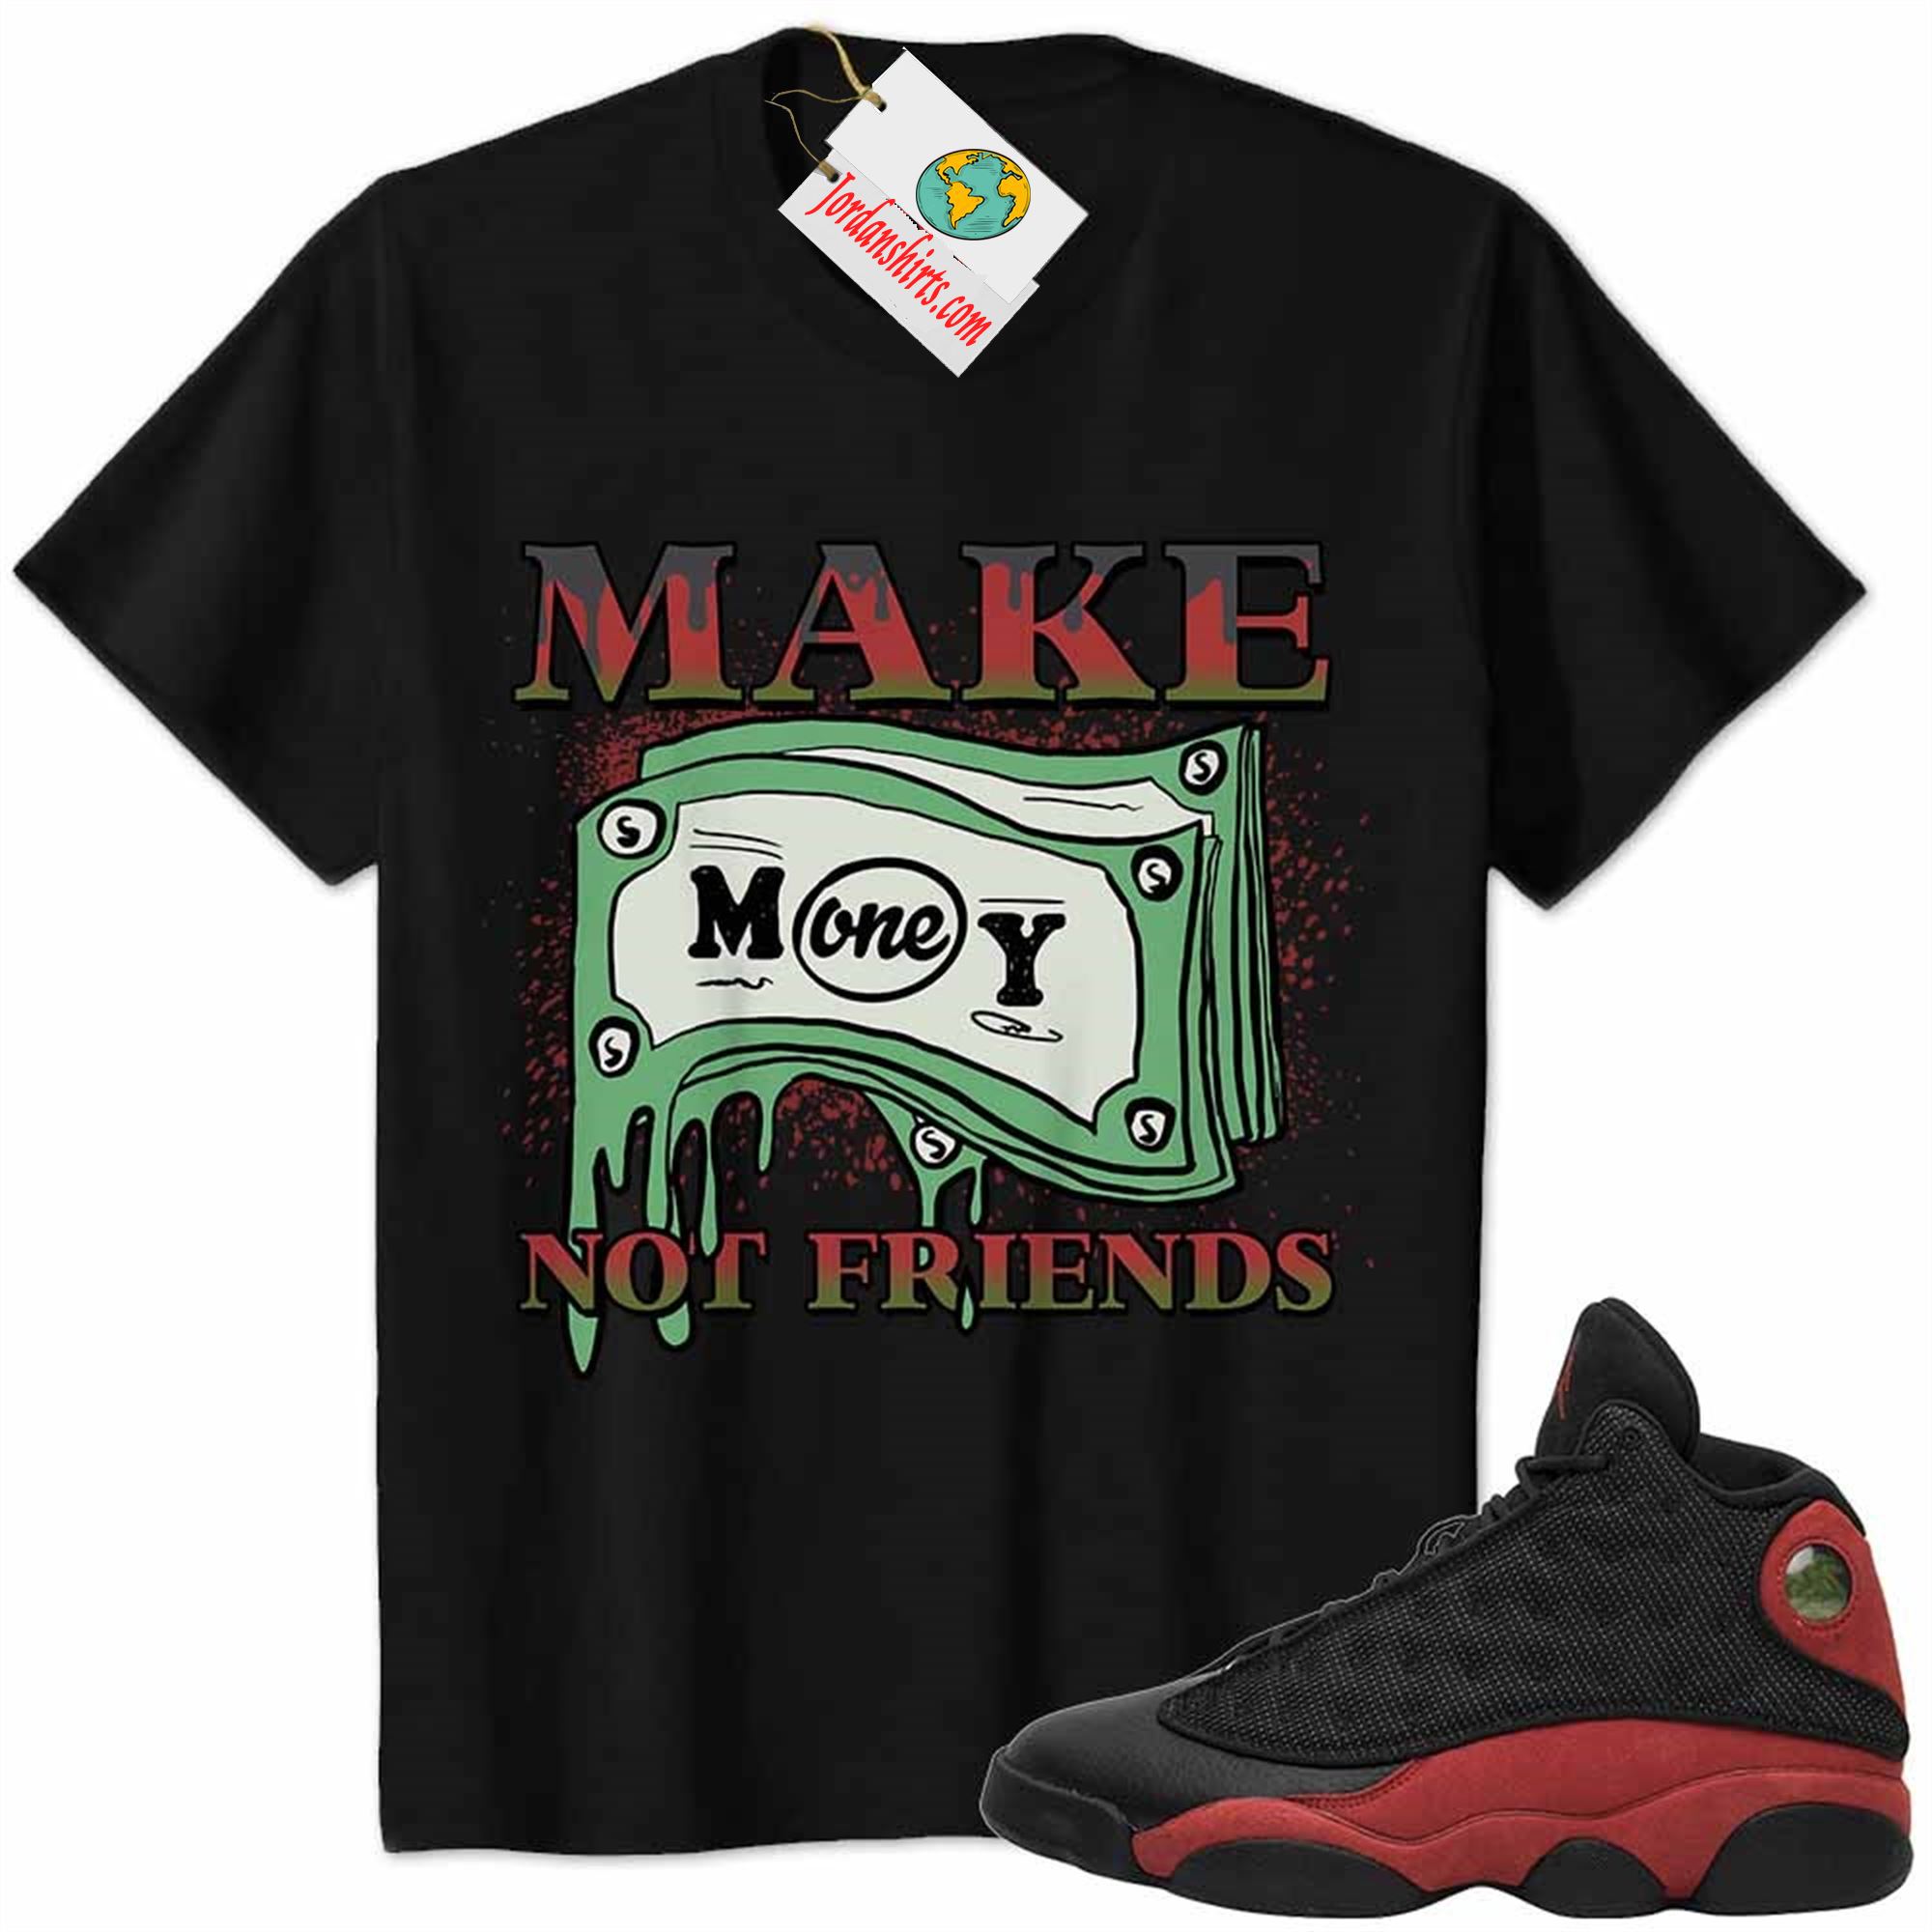 Jordan 13 Shirt, Jordan 13 Bred Shirt Make Money Graffiti Black Full Size Up To 5xl